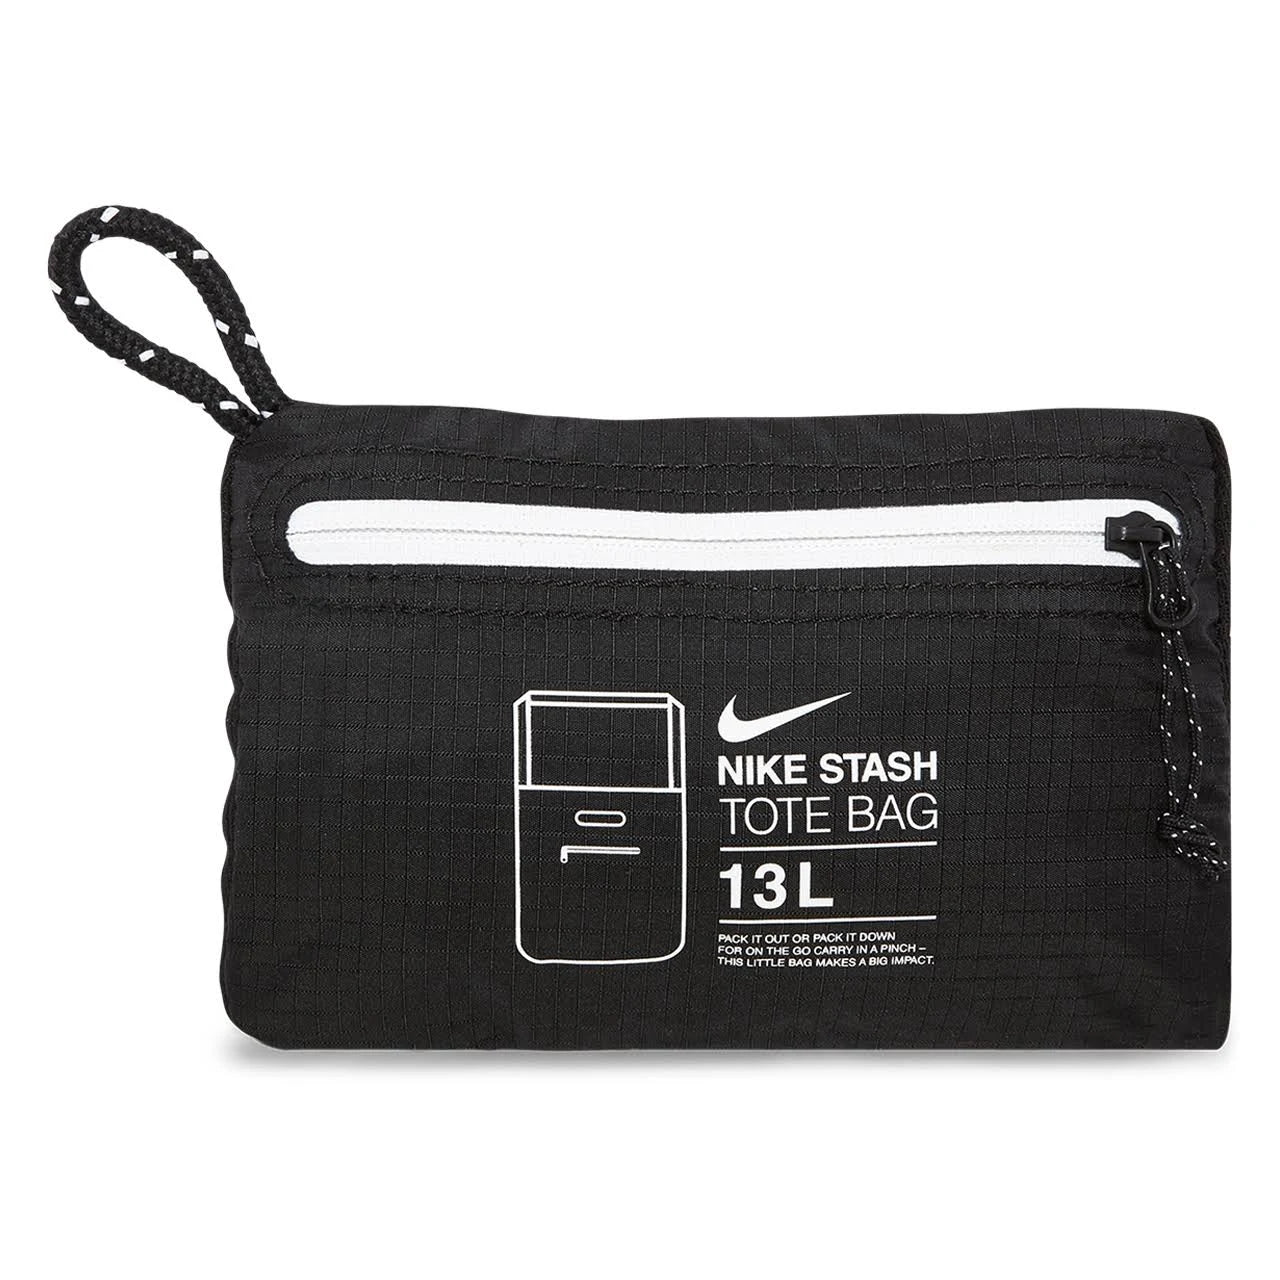 Nike Stash Tote Bag 13L